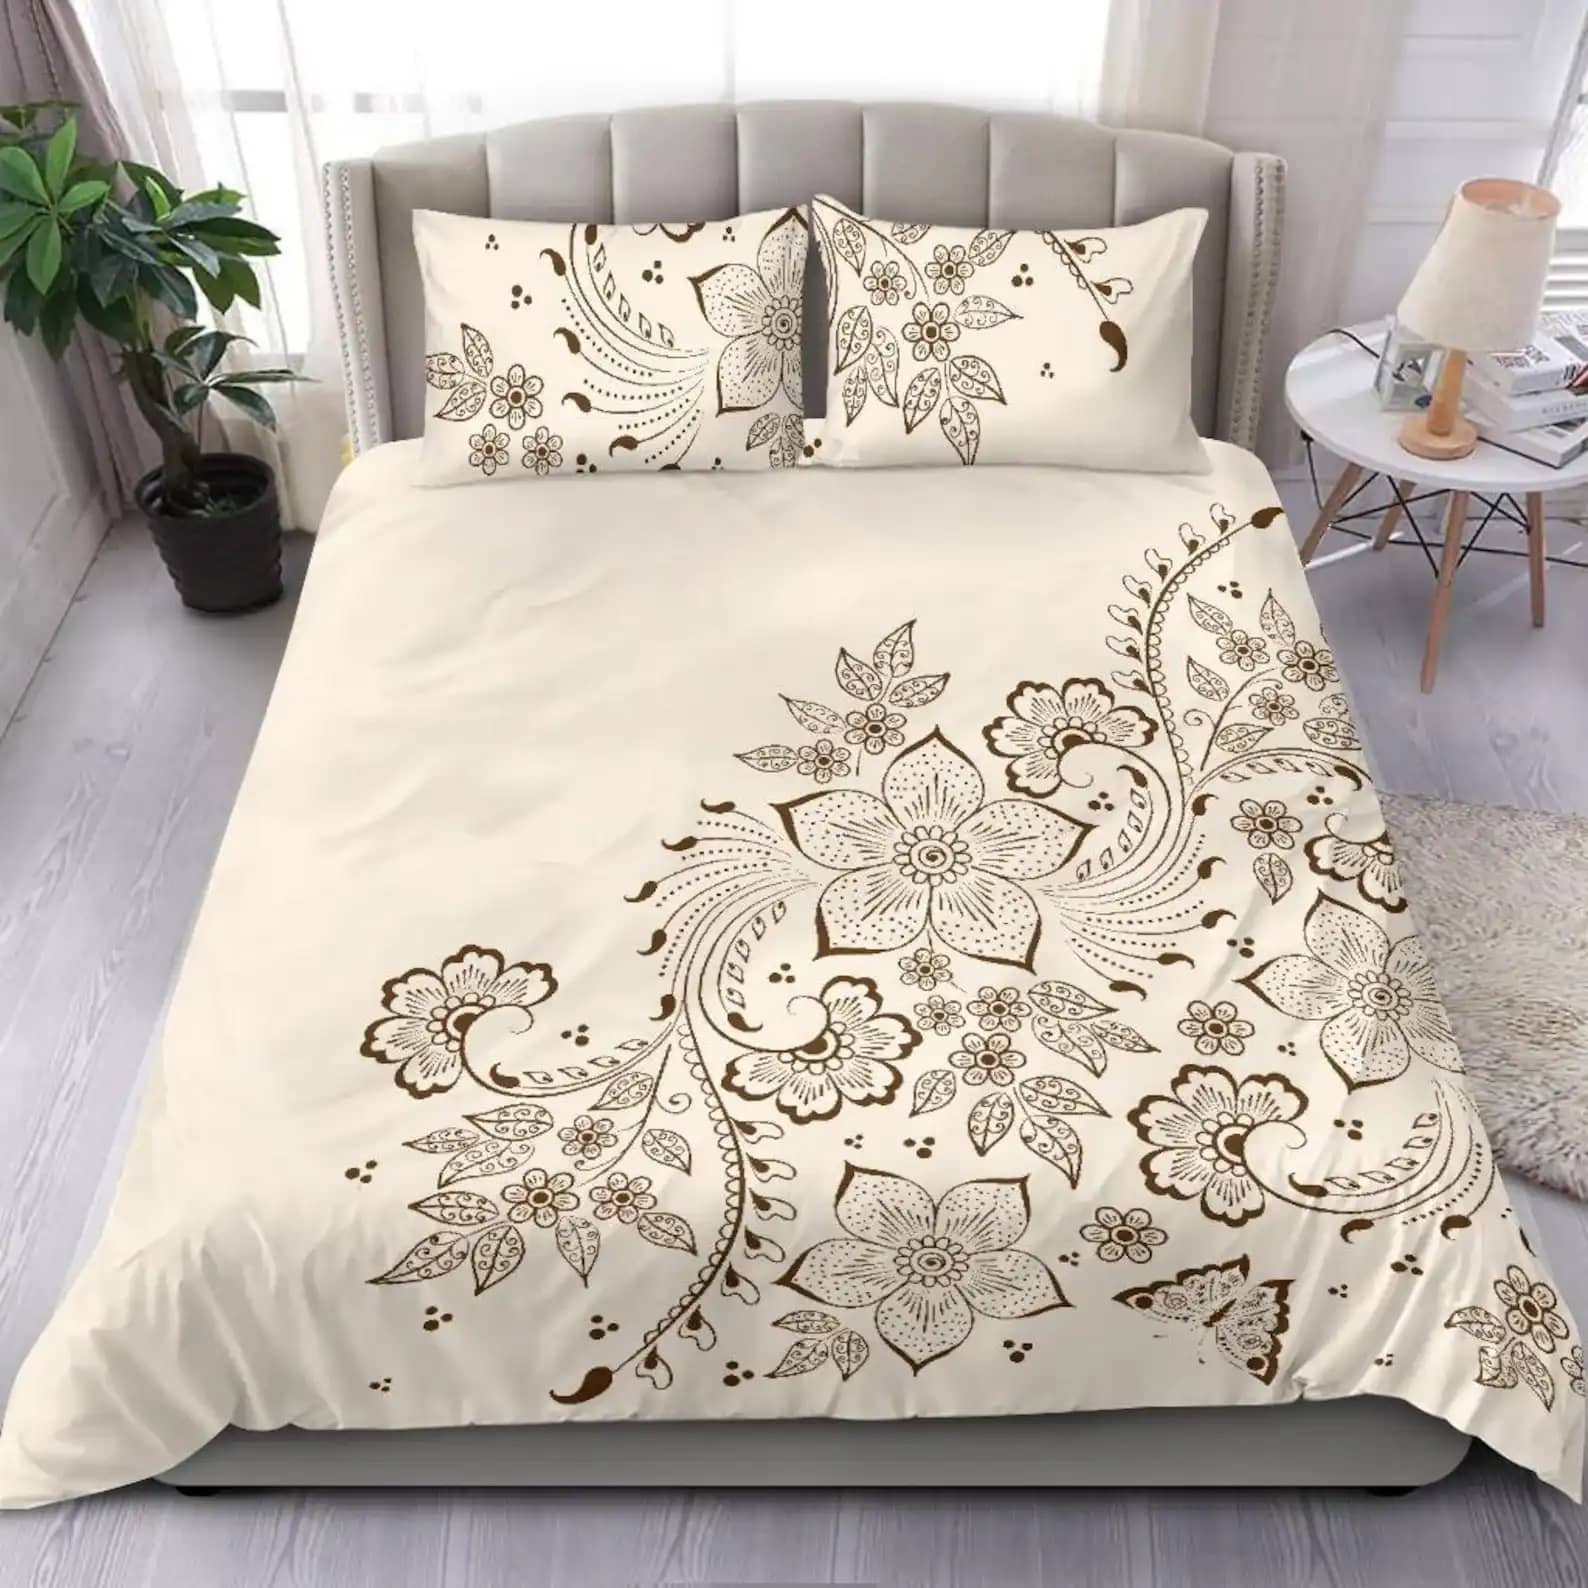 Elegant Black And White Flower Ornamental Design For A Fancy Sweet Sleep Quilt Bedding Sets